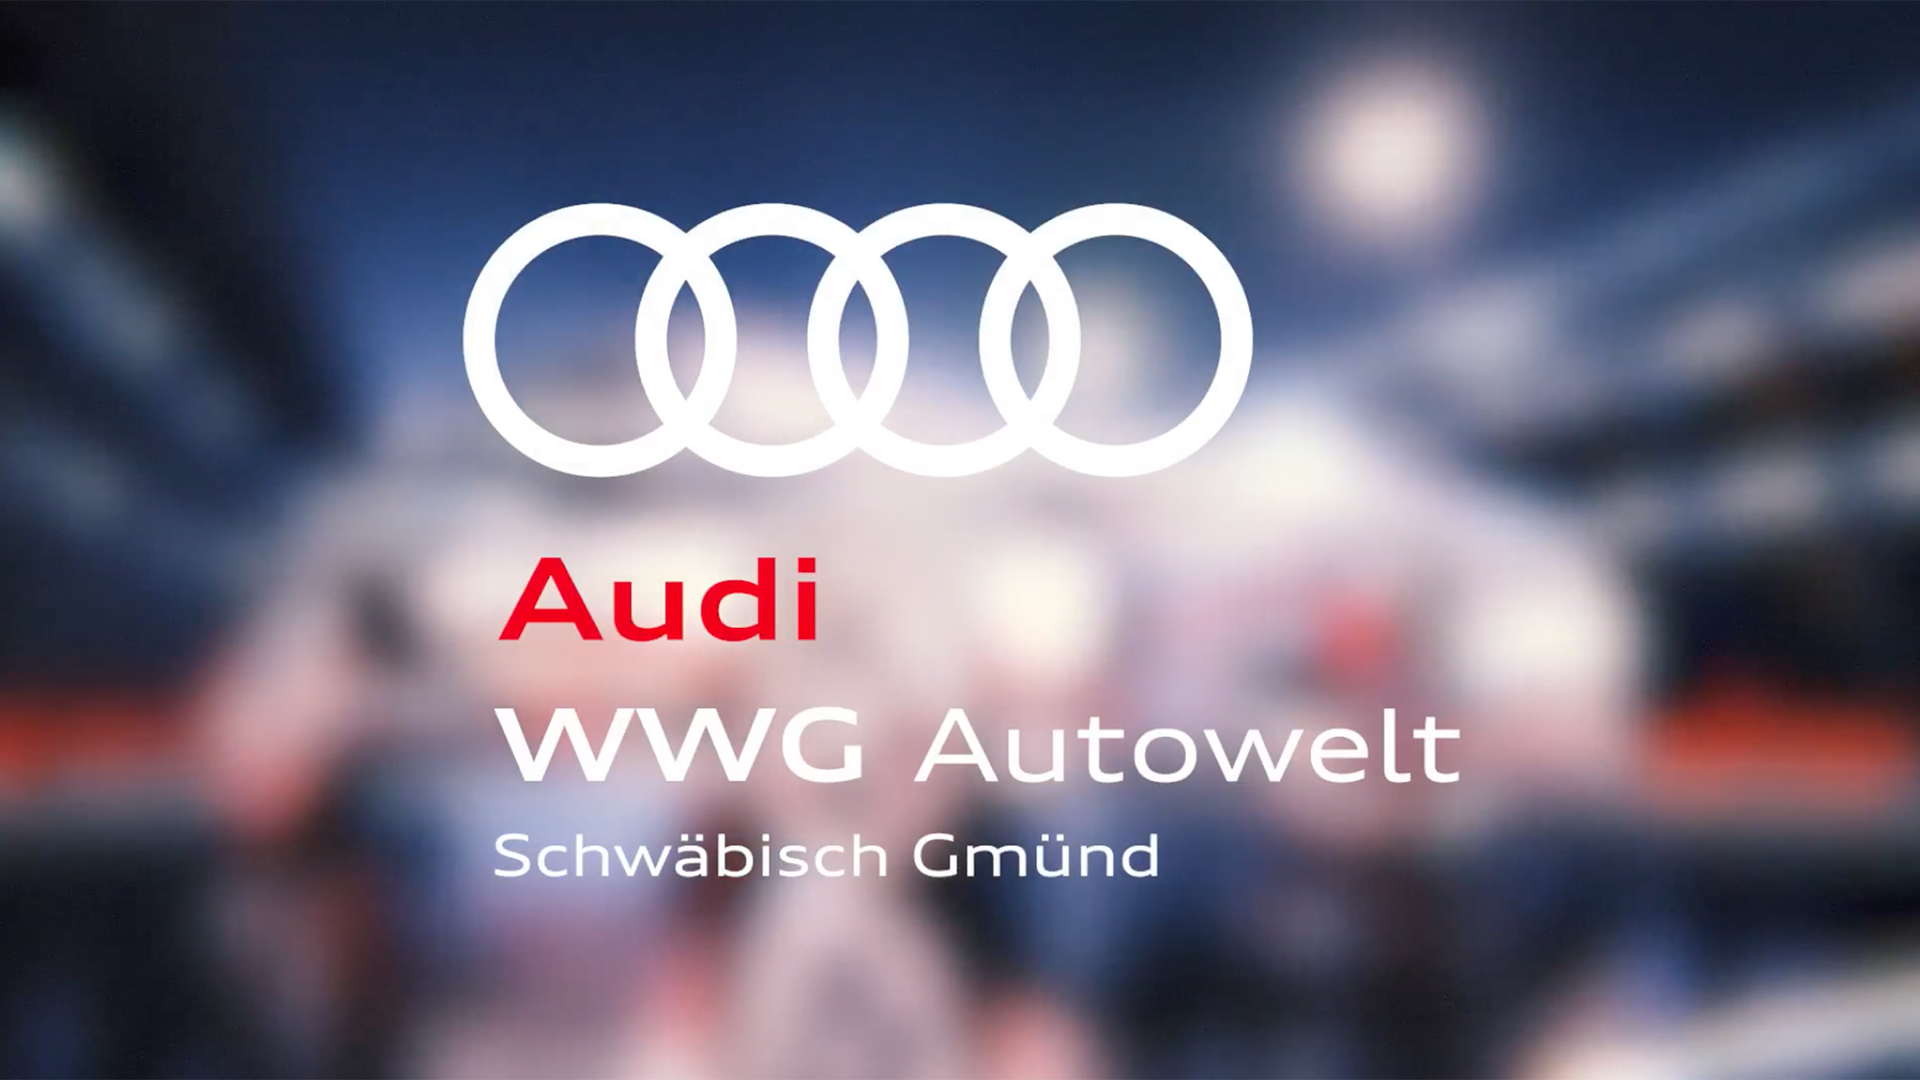 WWG Autowelt - Imagefilm & Werbung